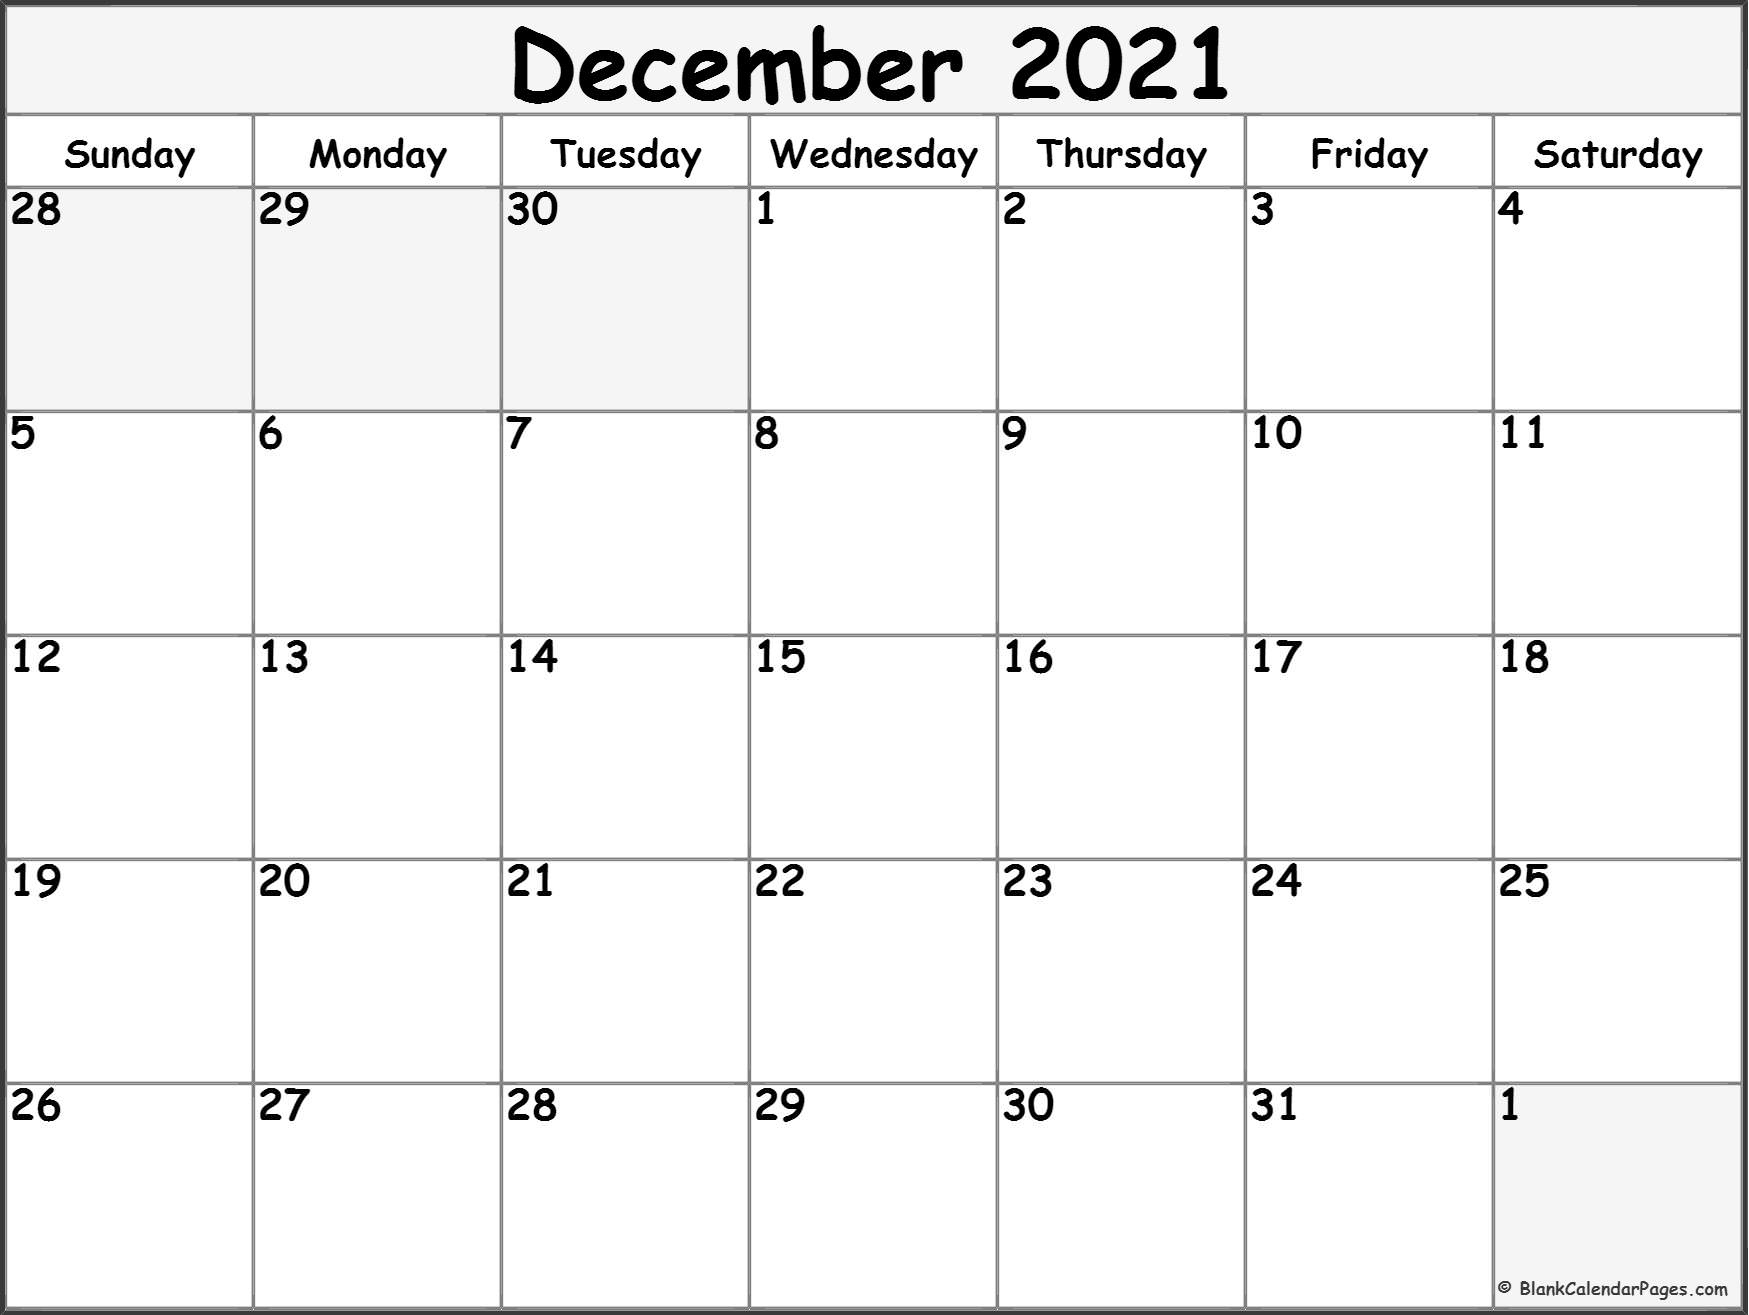 December 2021 Blank Calendar Templates 1 - Calendar Template 2021 December 2021 Hindu Calendar